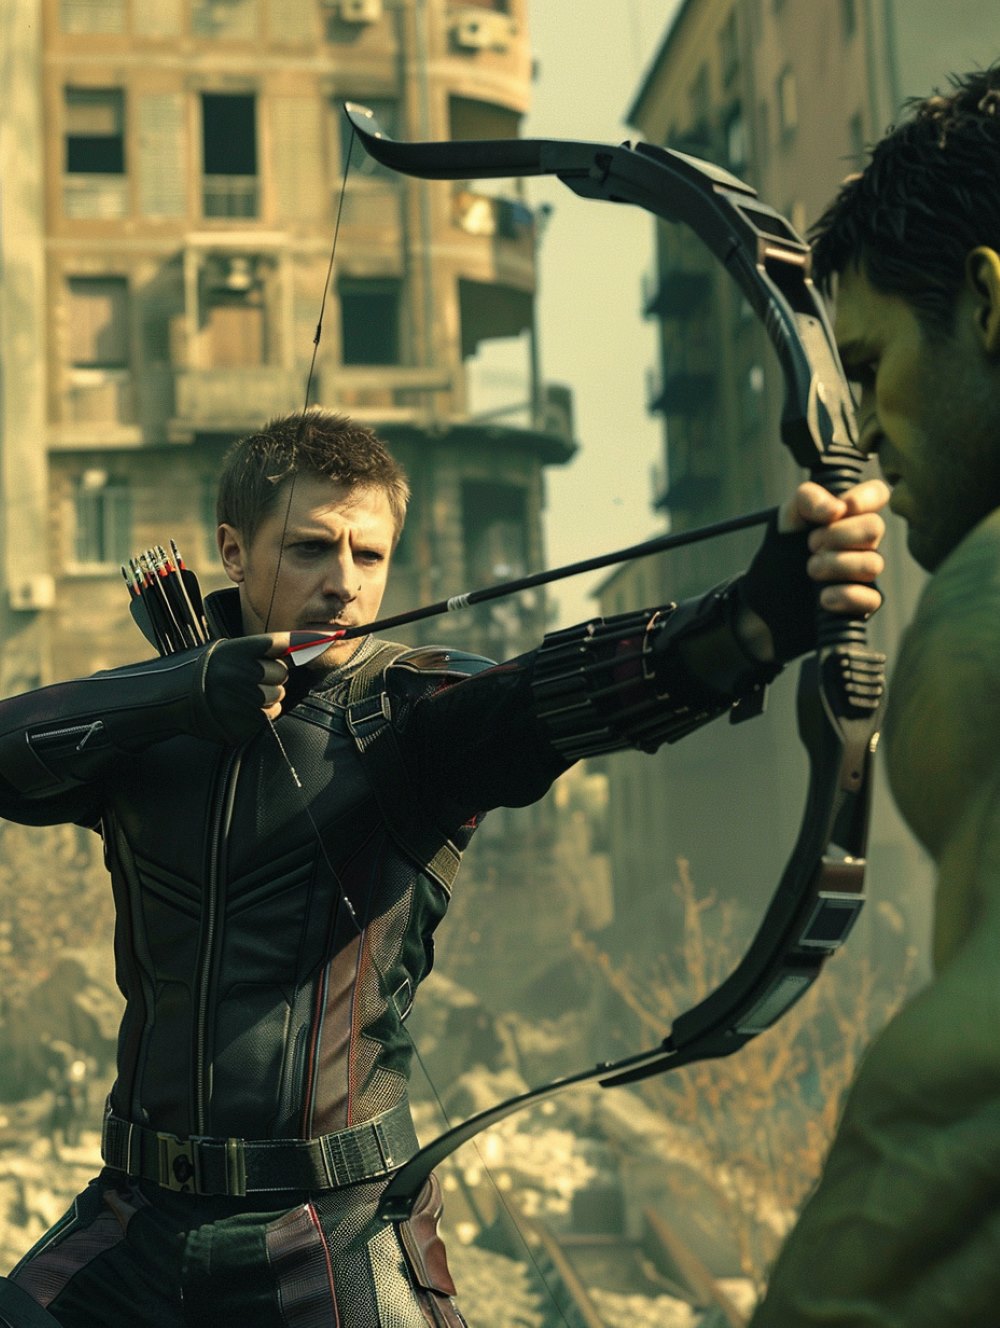 Hawkeye is shooting Hulk